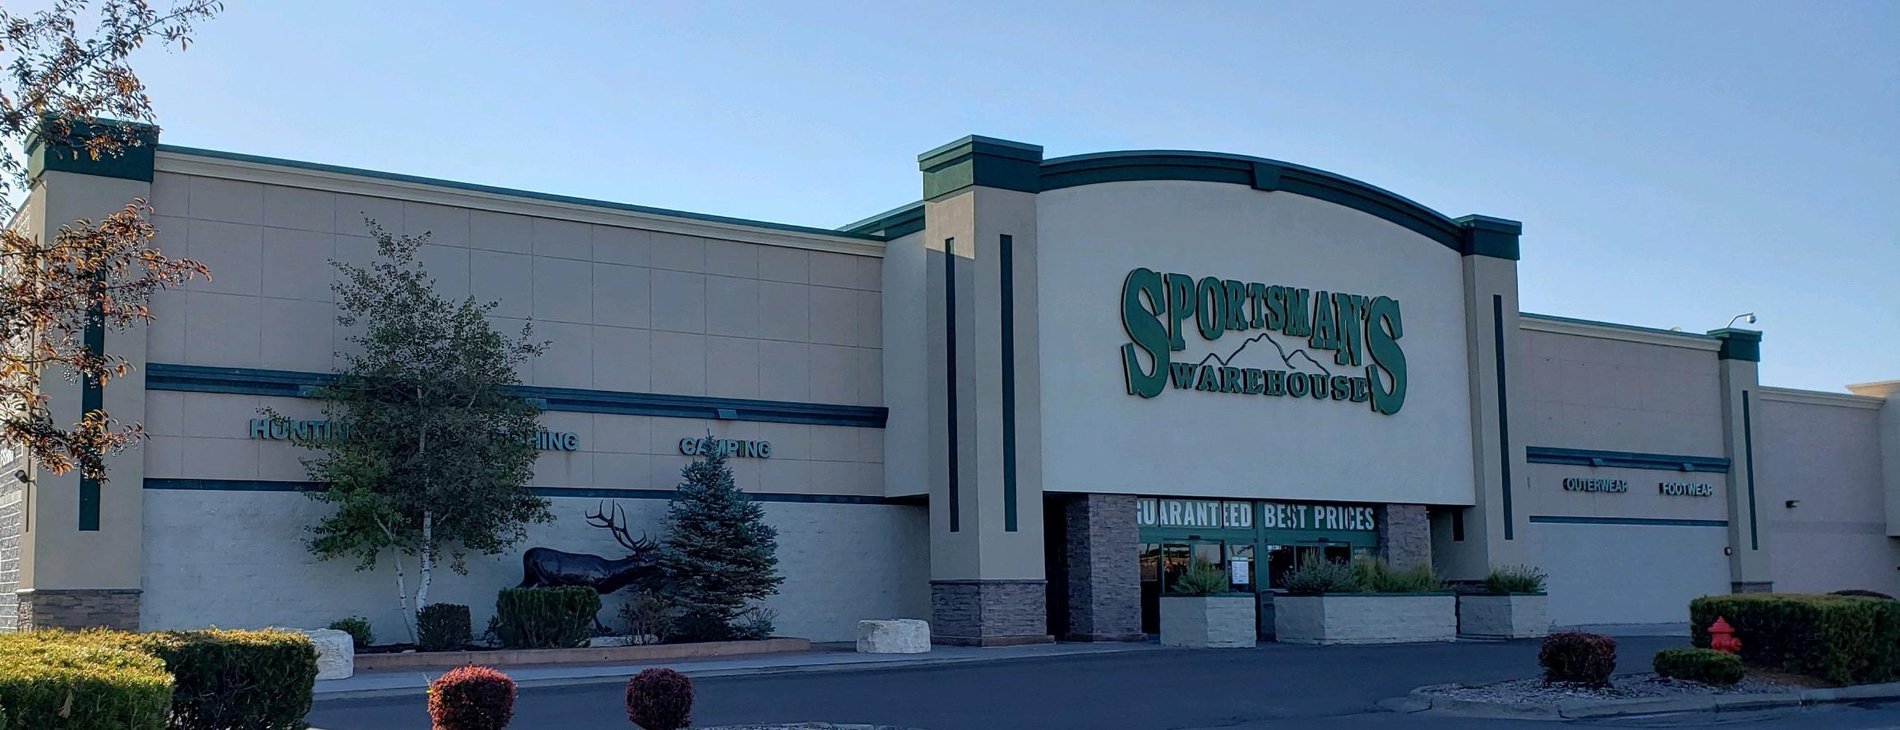 Idaho Falls Id Outdoor Sporting Goods Store Sportsman S Warehouse